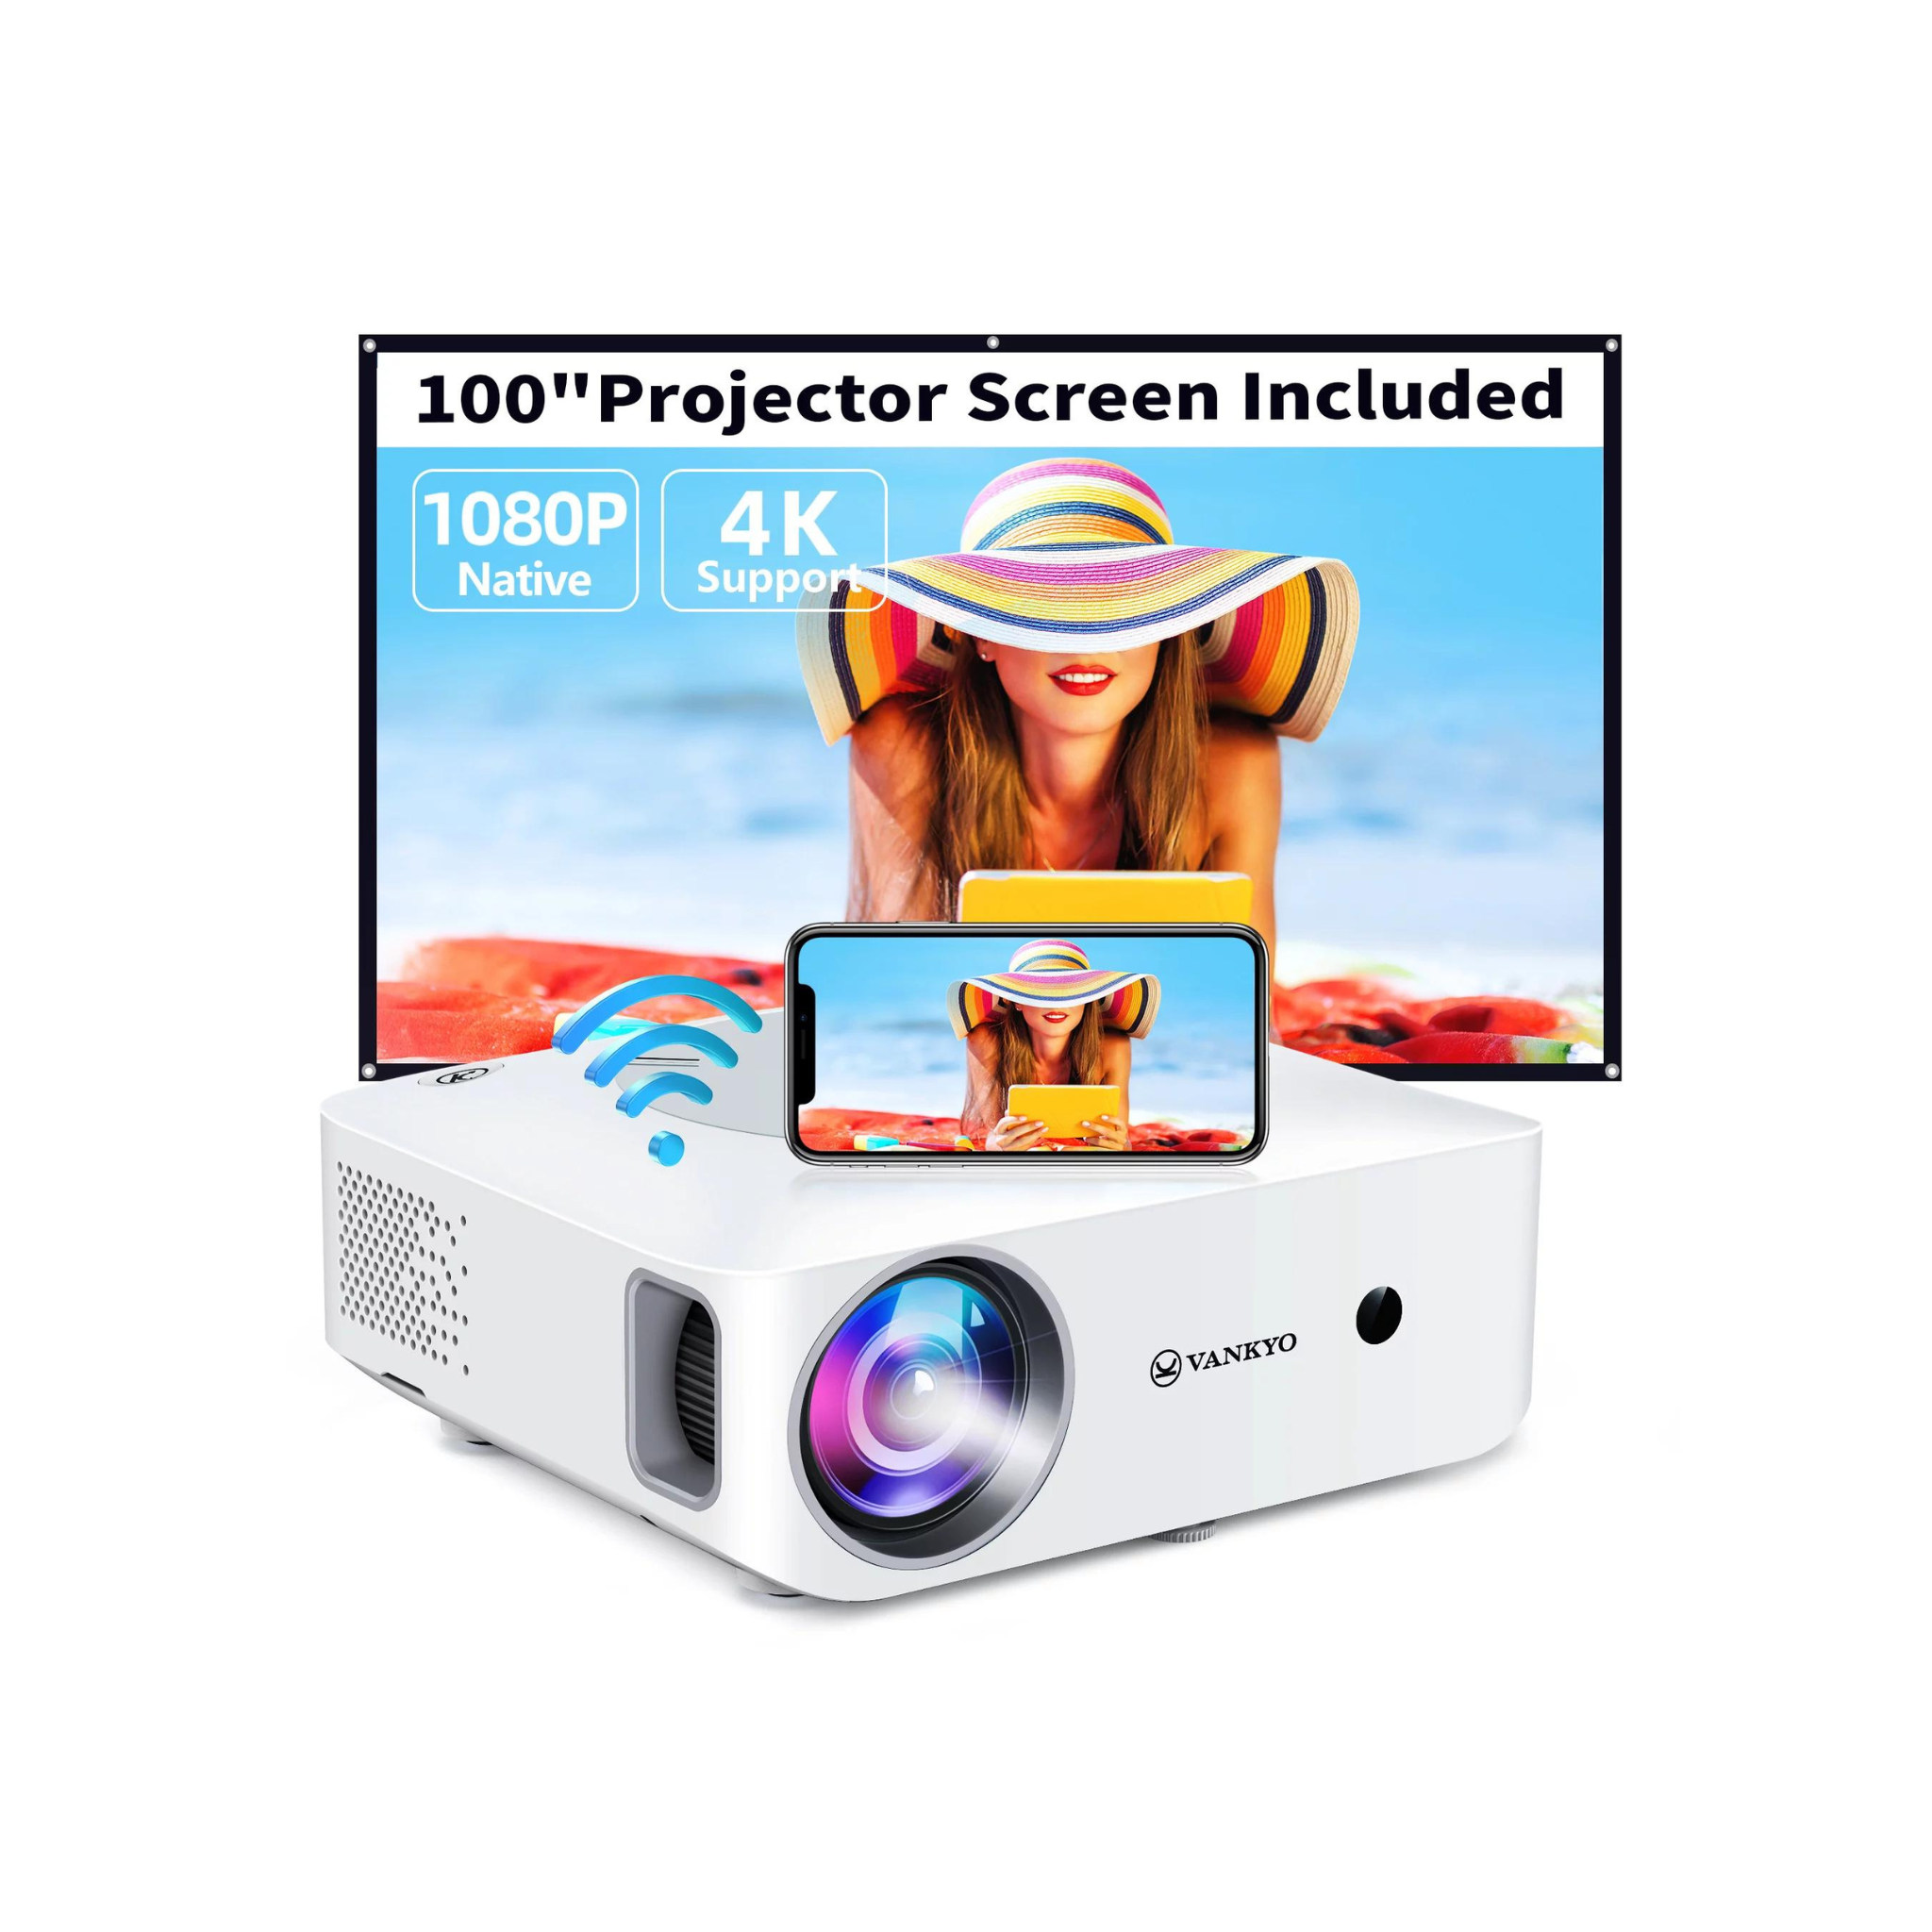 1080P 5G WiFi Projector